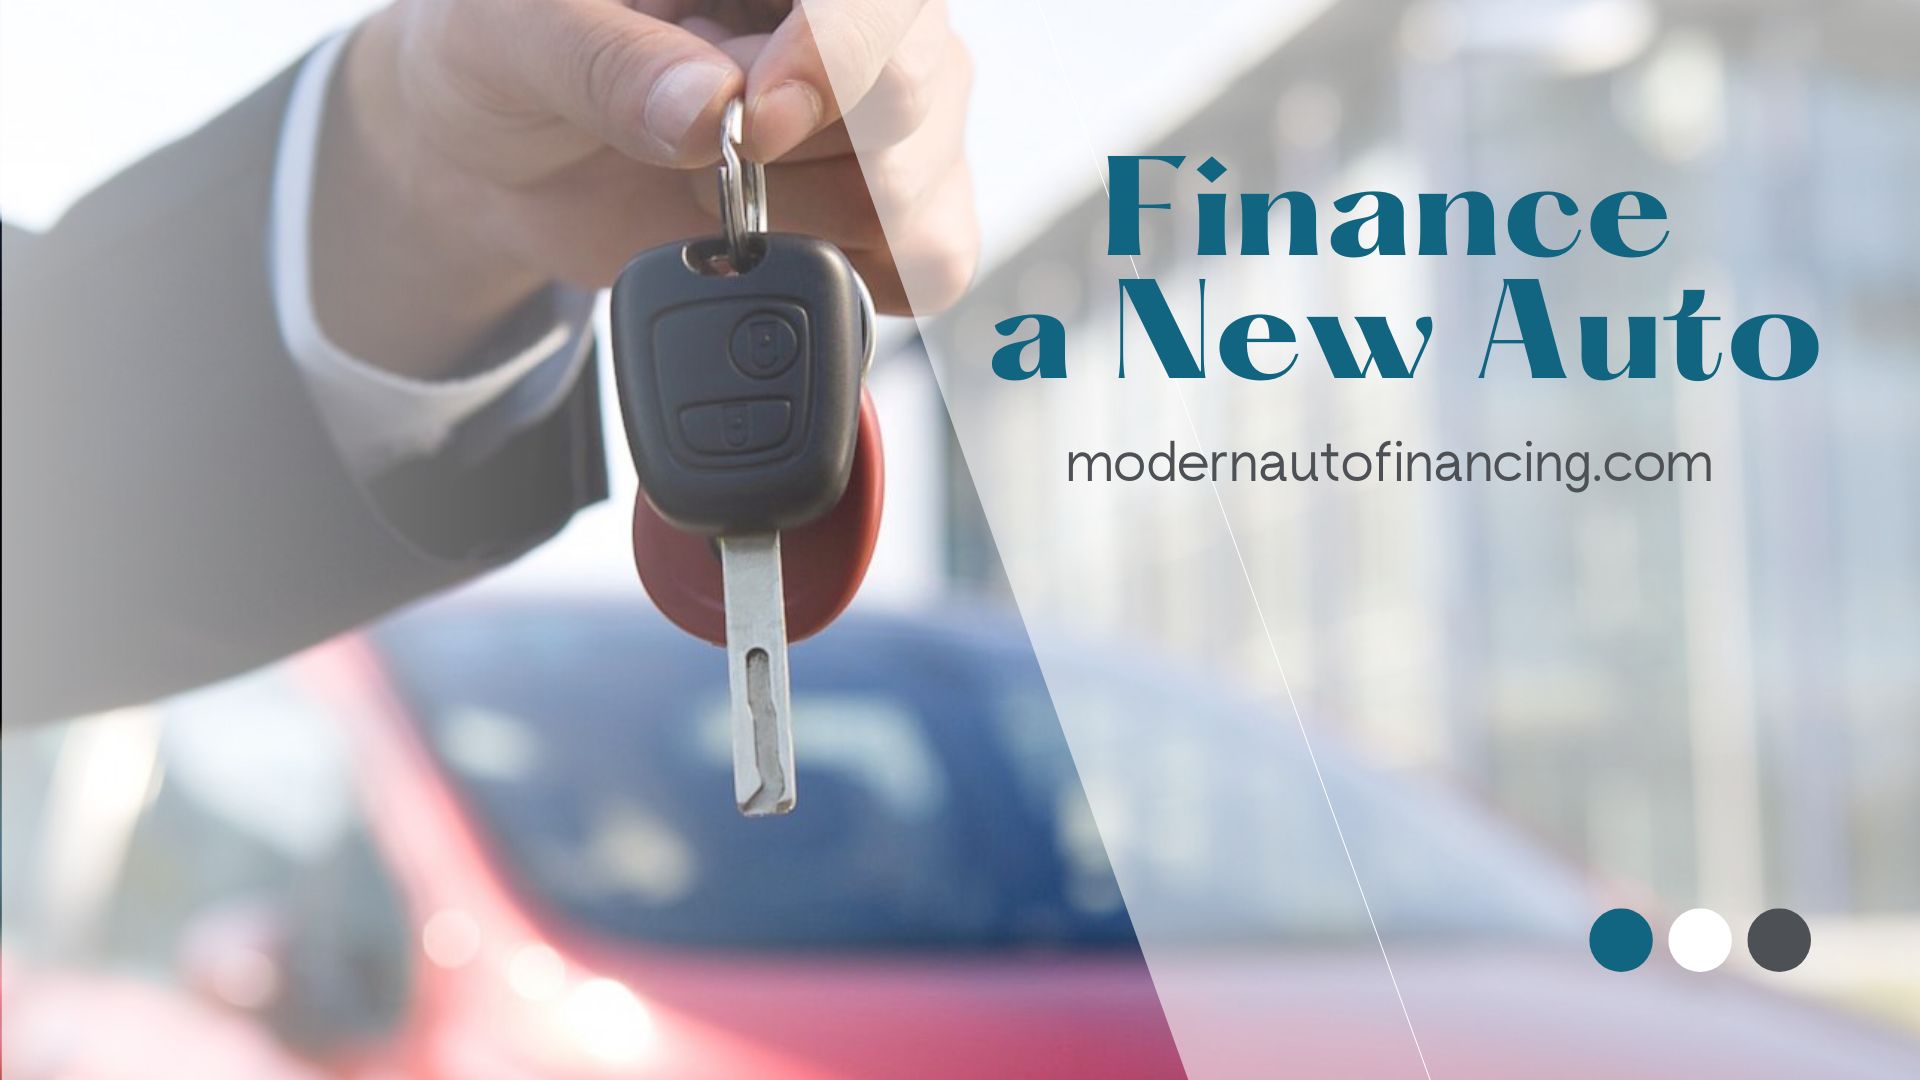 Finance a New Auto